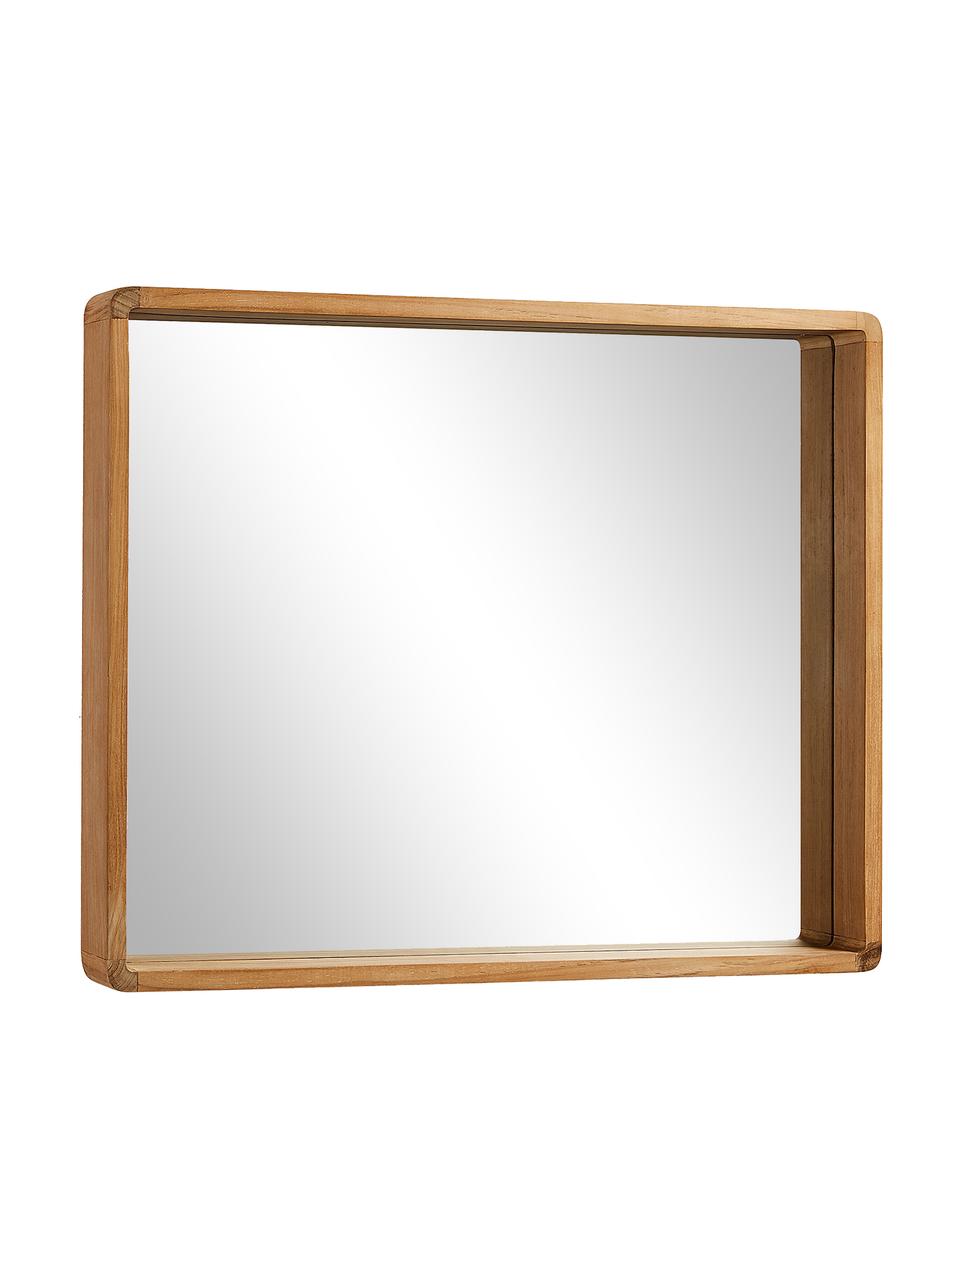 Eckiger Wandspiegel Kuveni mit Teakholzrahmen, Rahmen: Teakholz, Spiegelfläche: Spiegelglas, Braun, B 80 x H 65 cm